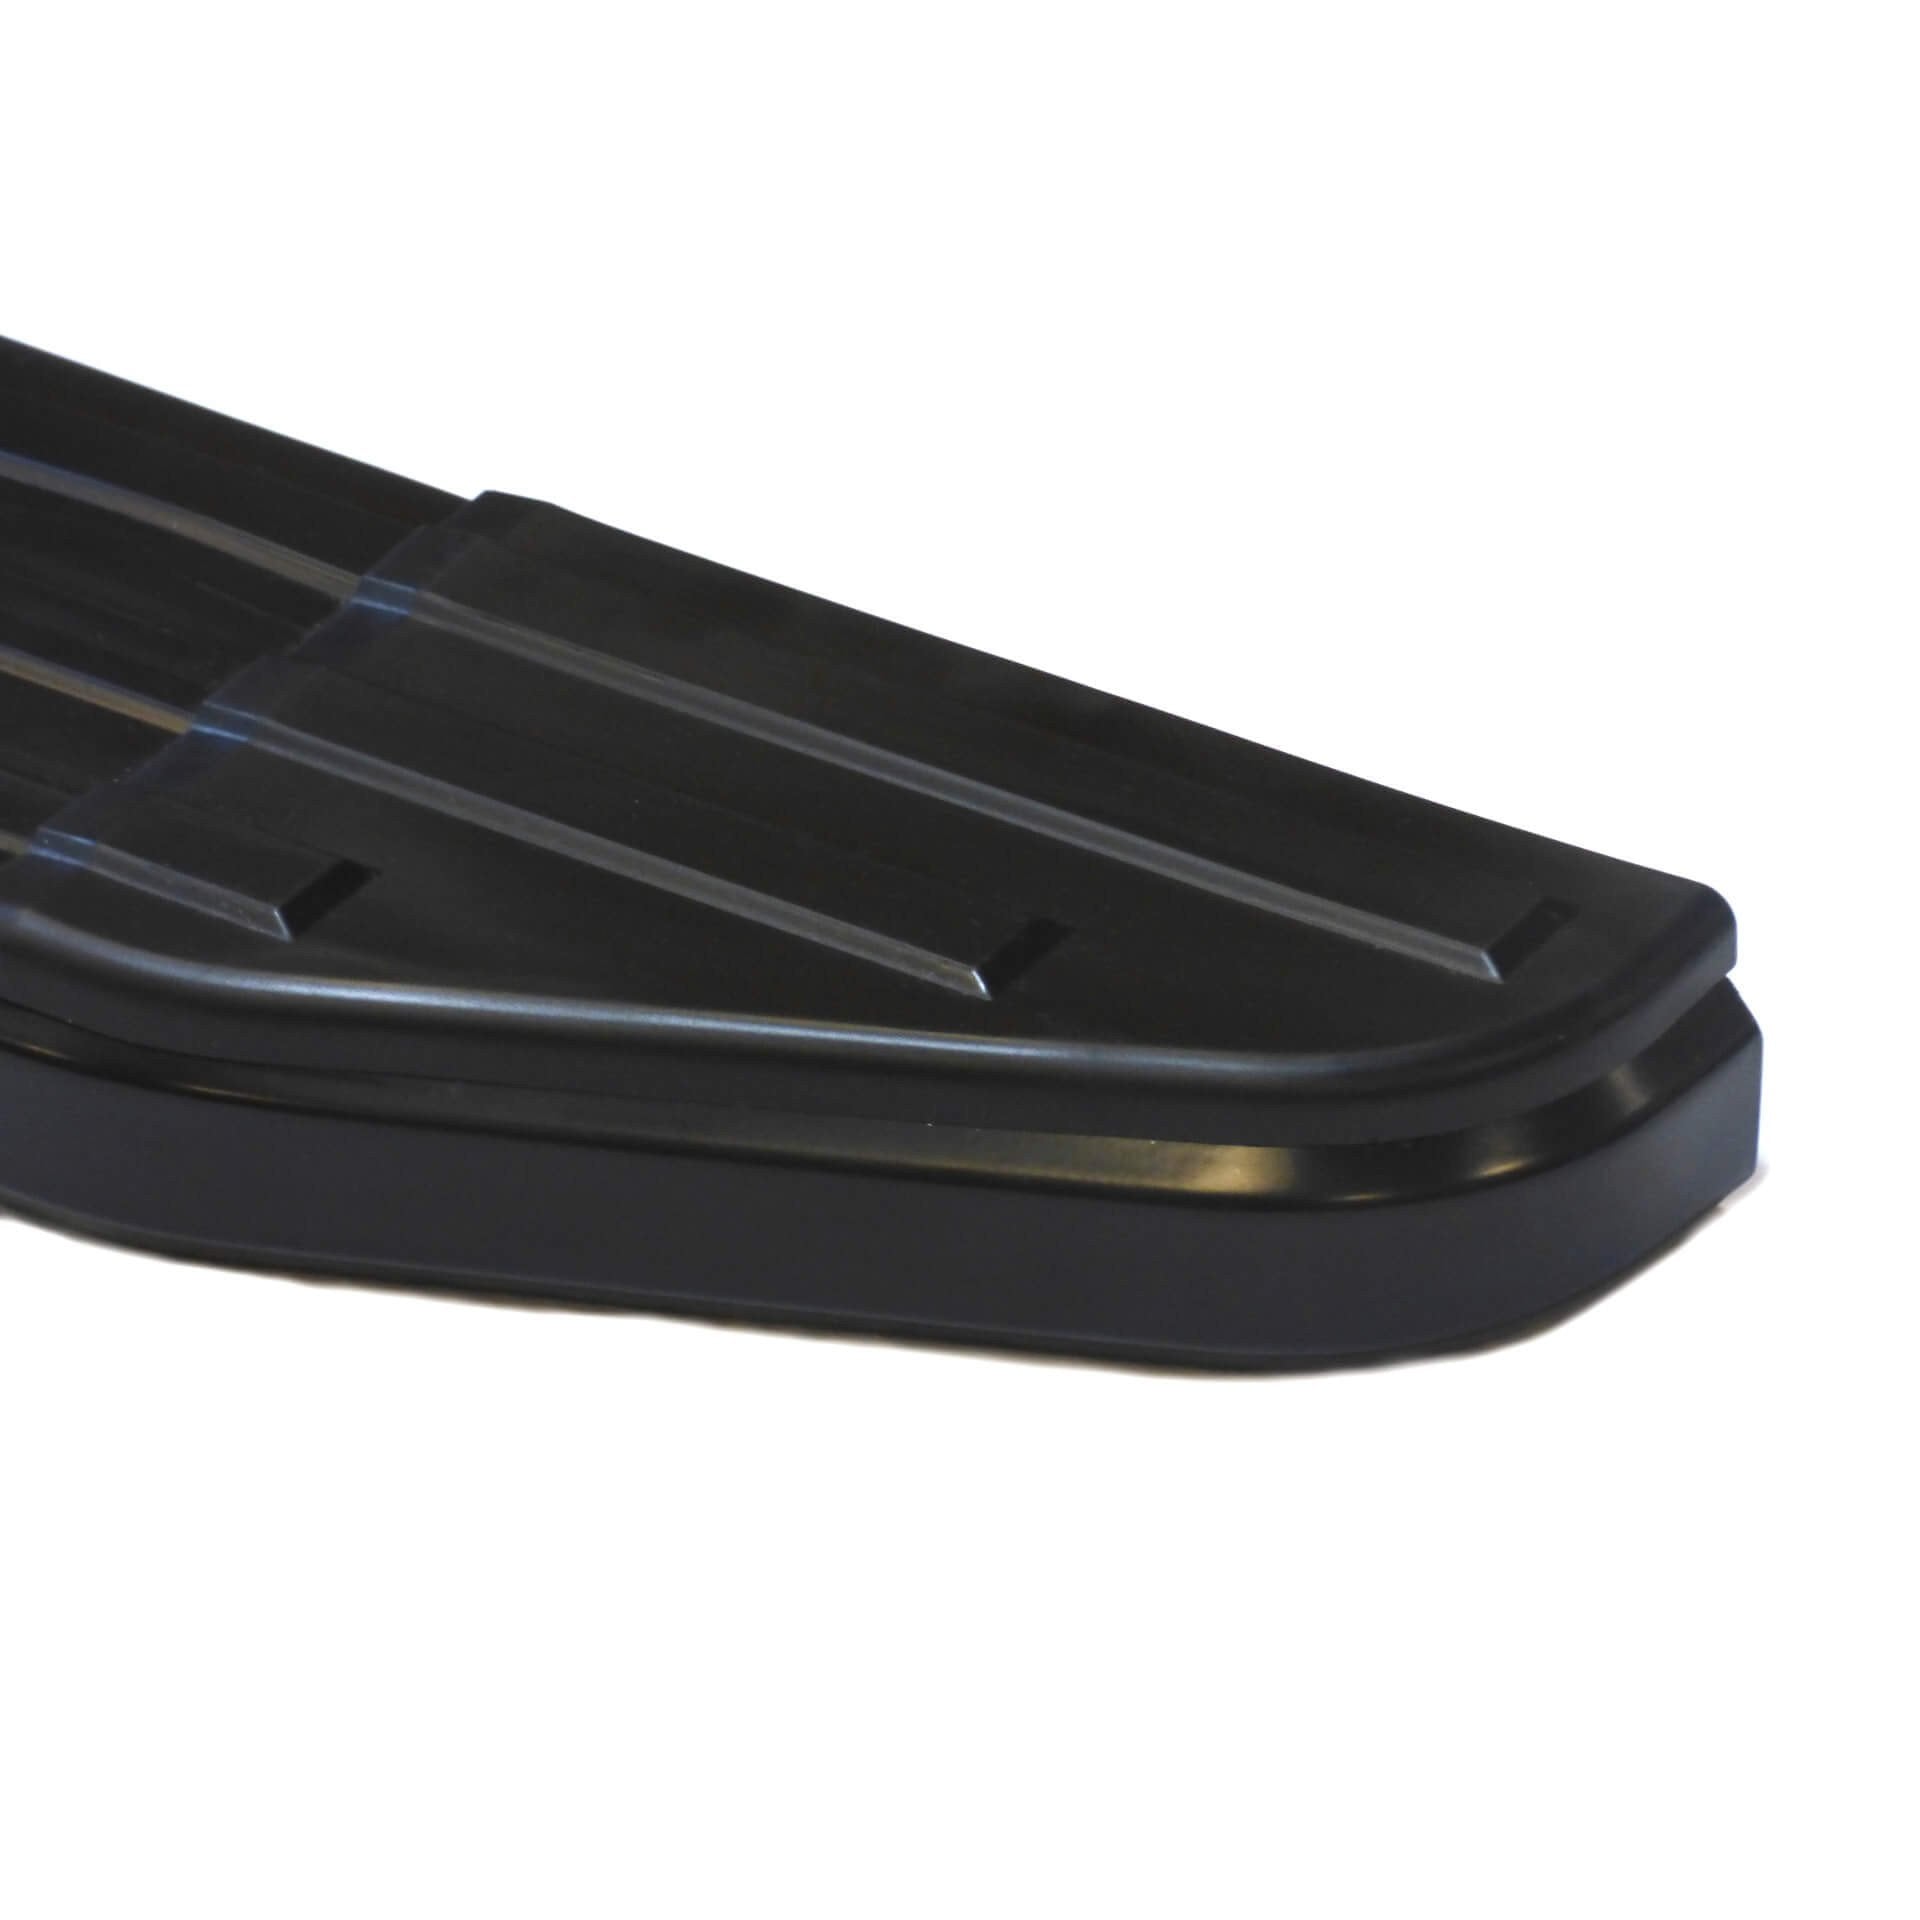 Black Raptor Side Steps Running Boards for BMW X3 F25 10-17(inc. M Sport Models) -  - sold by Direct4x4